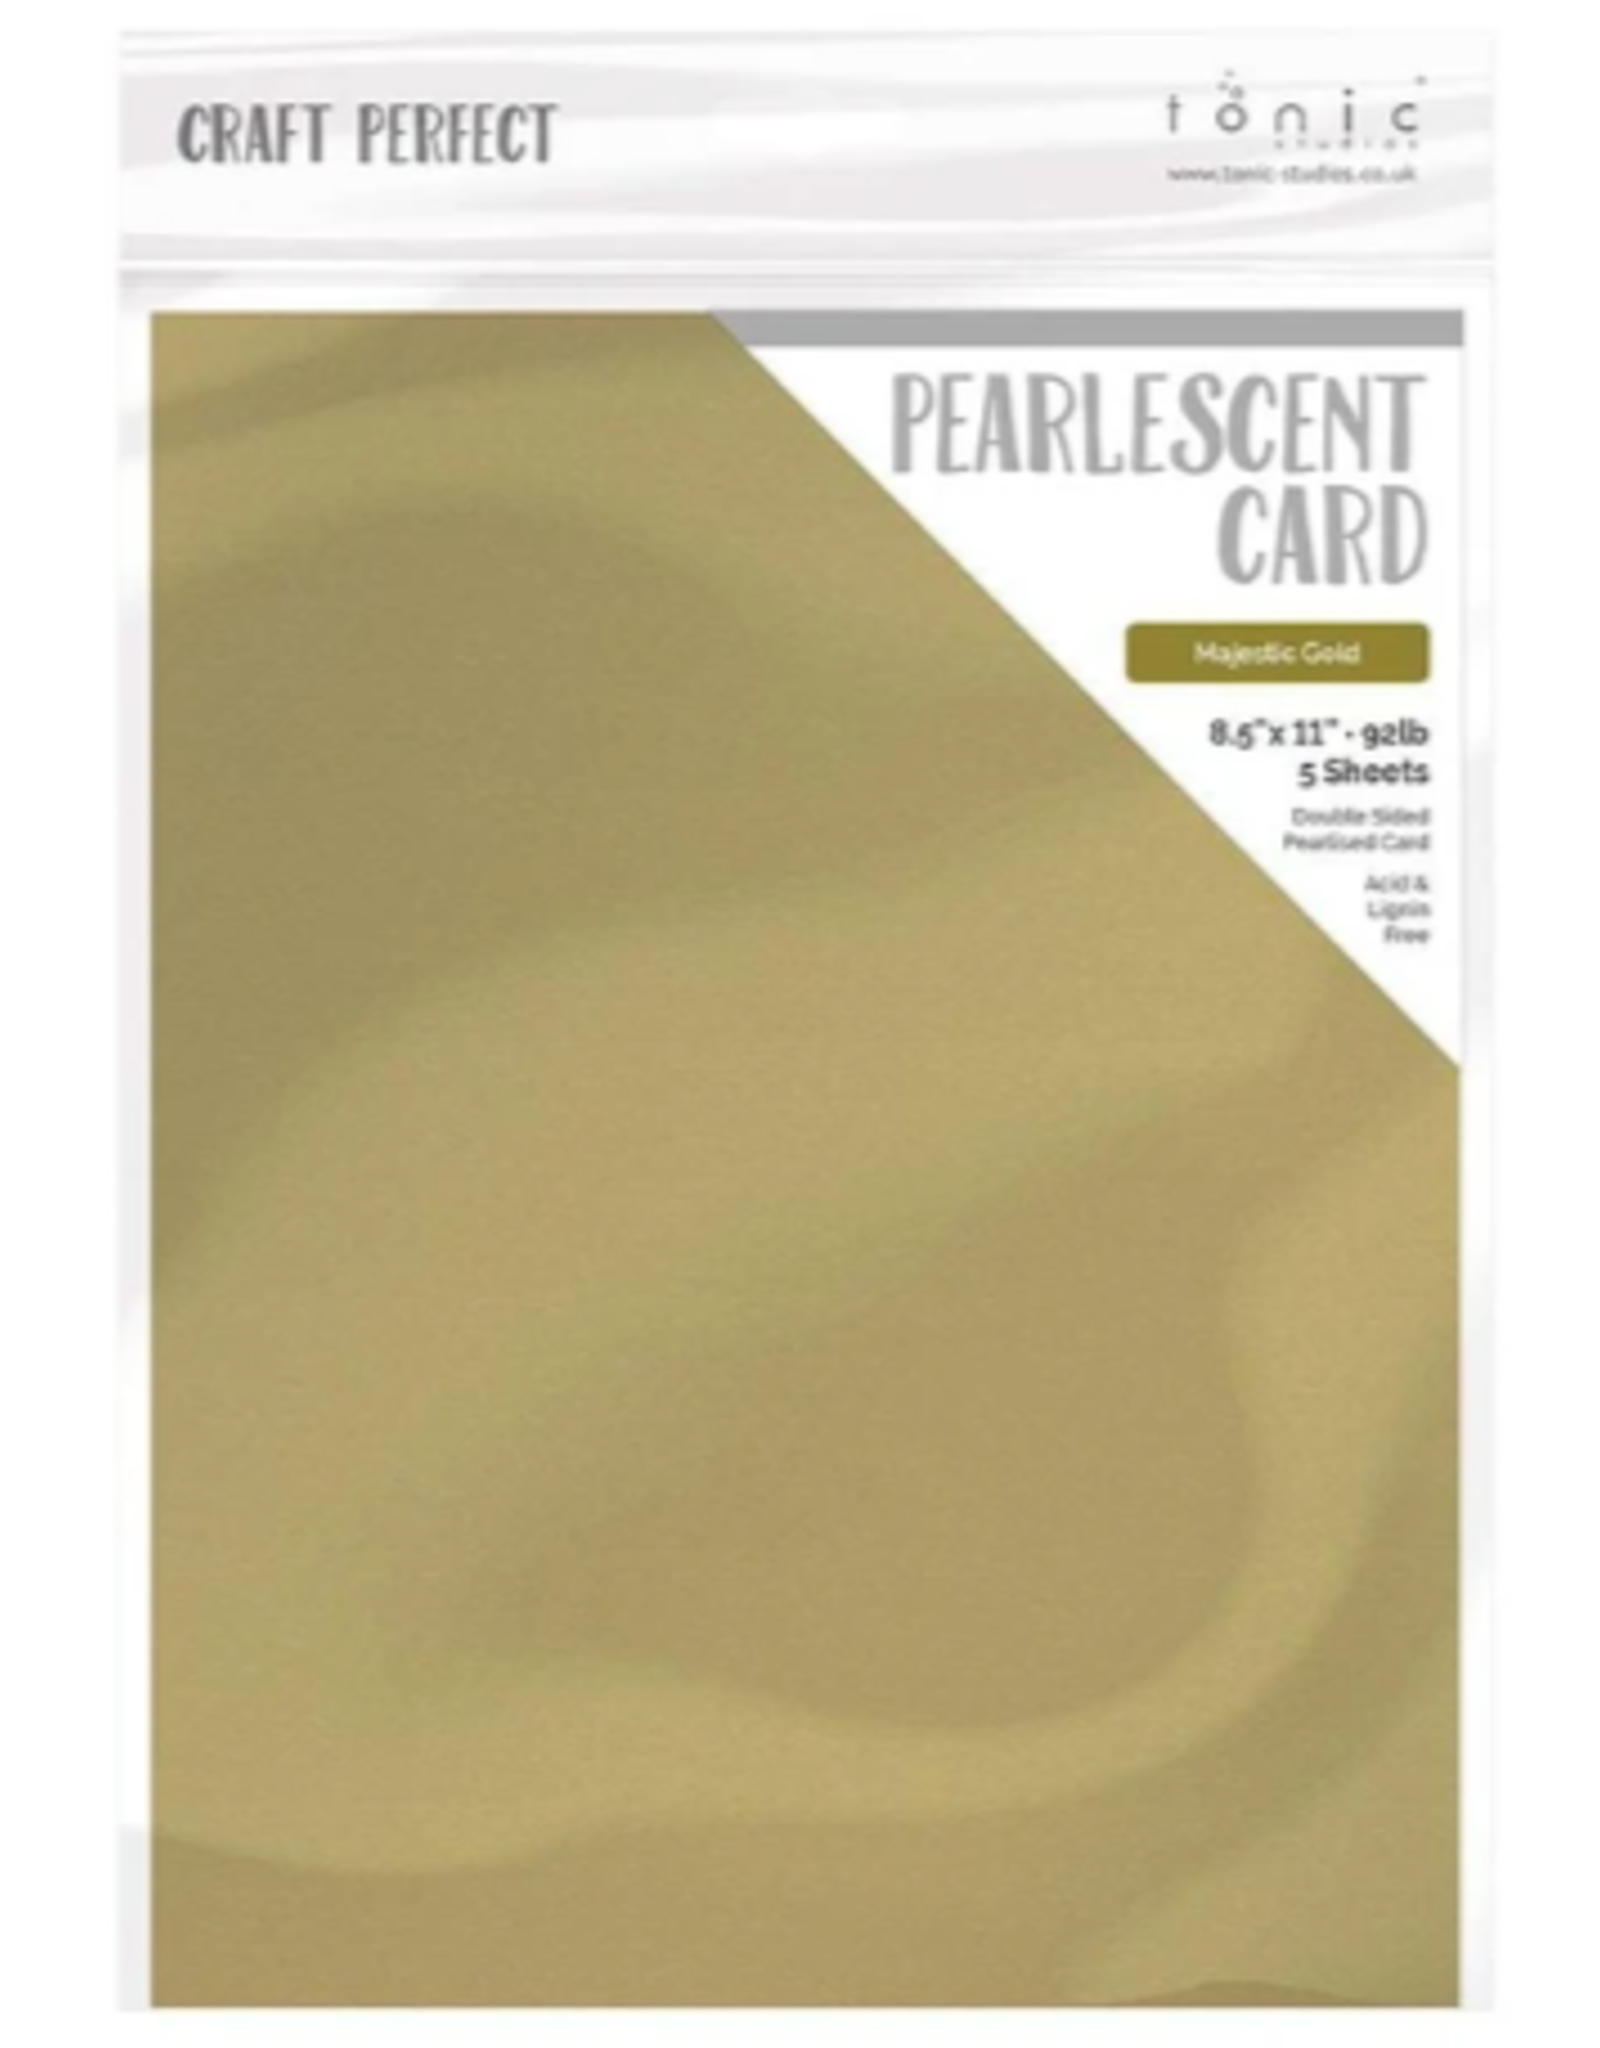 TONIC TONIC STUDIOS PEARLESCENT CARD MAJESTIC GOLD 8.5X11 5PK